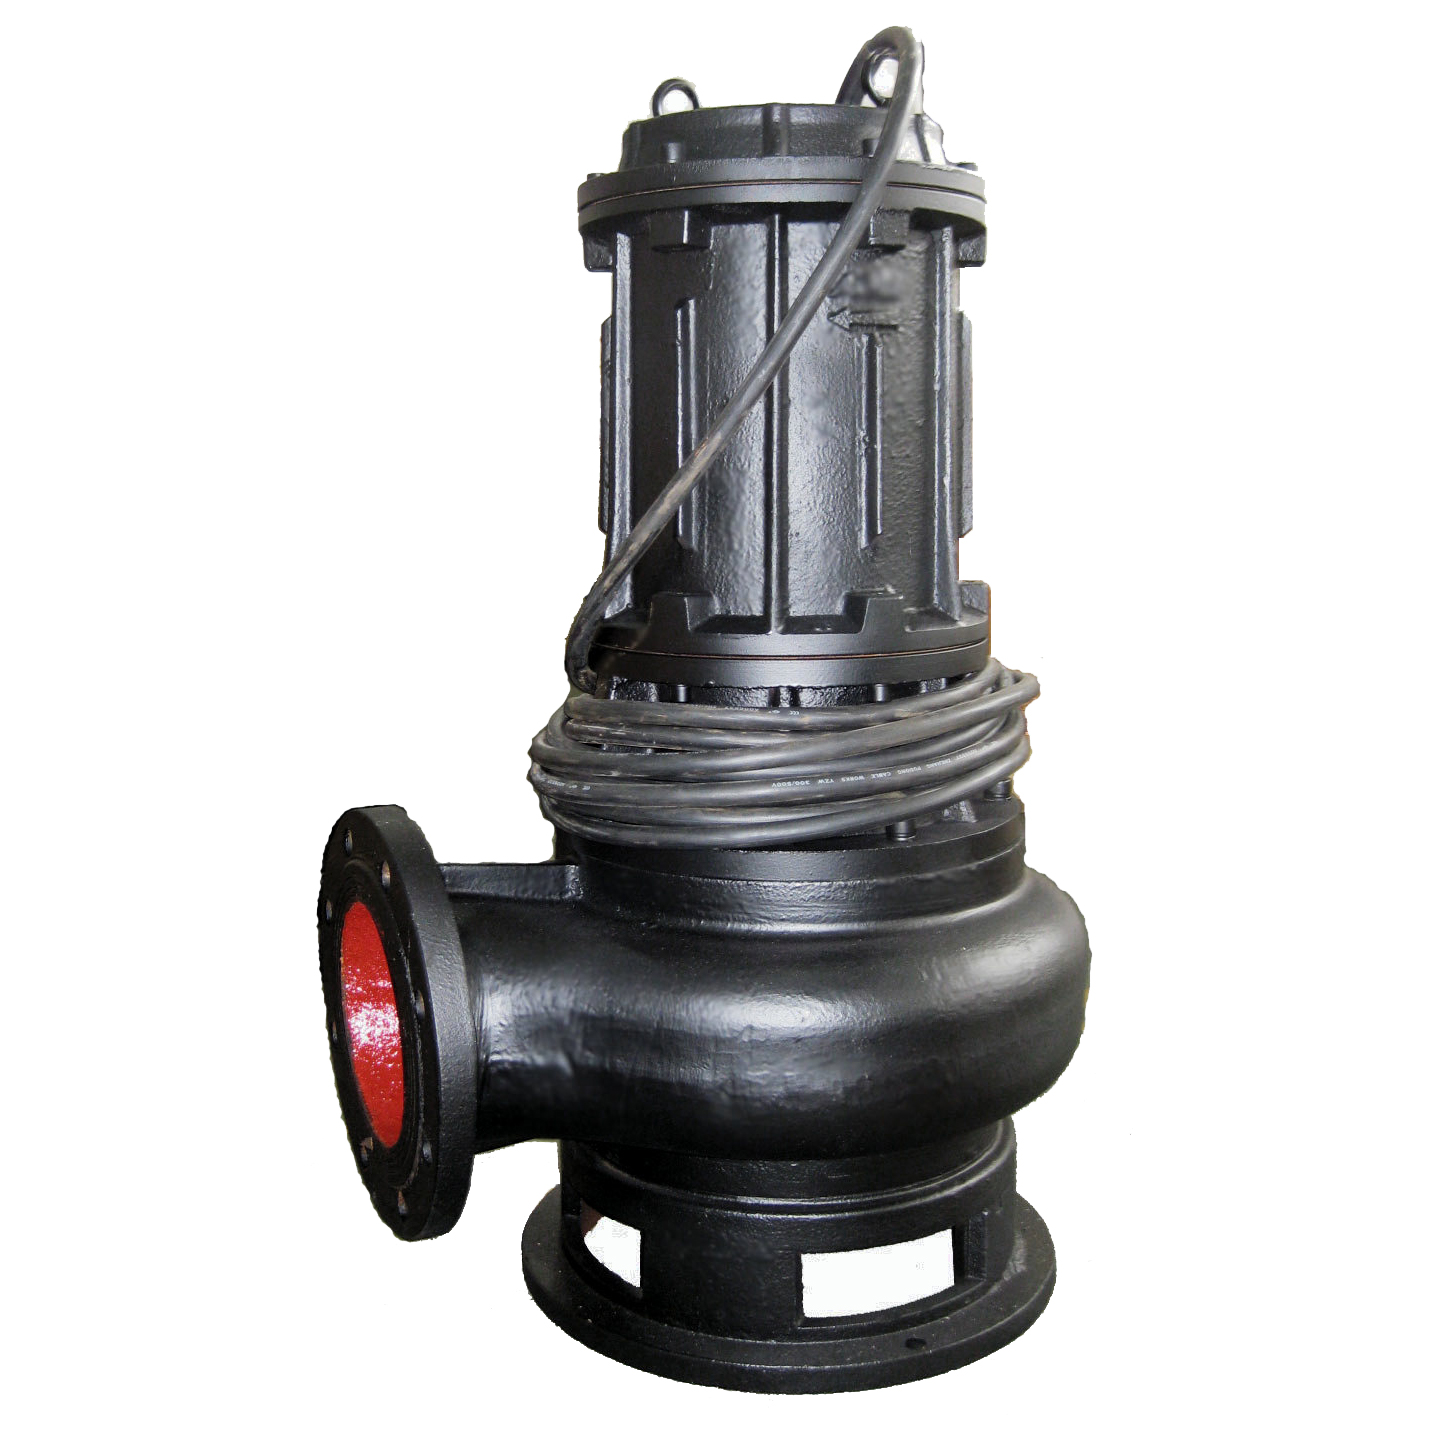 Bomba de aguas residuales sumergible de WQ - comprar la bomba de agua  sucia, bomba de colector de aceite, producto sumergible de la bomba en la  bomba Co. industrial, Ltd. de Shangai